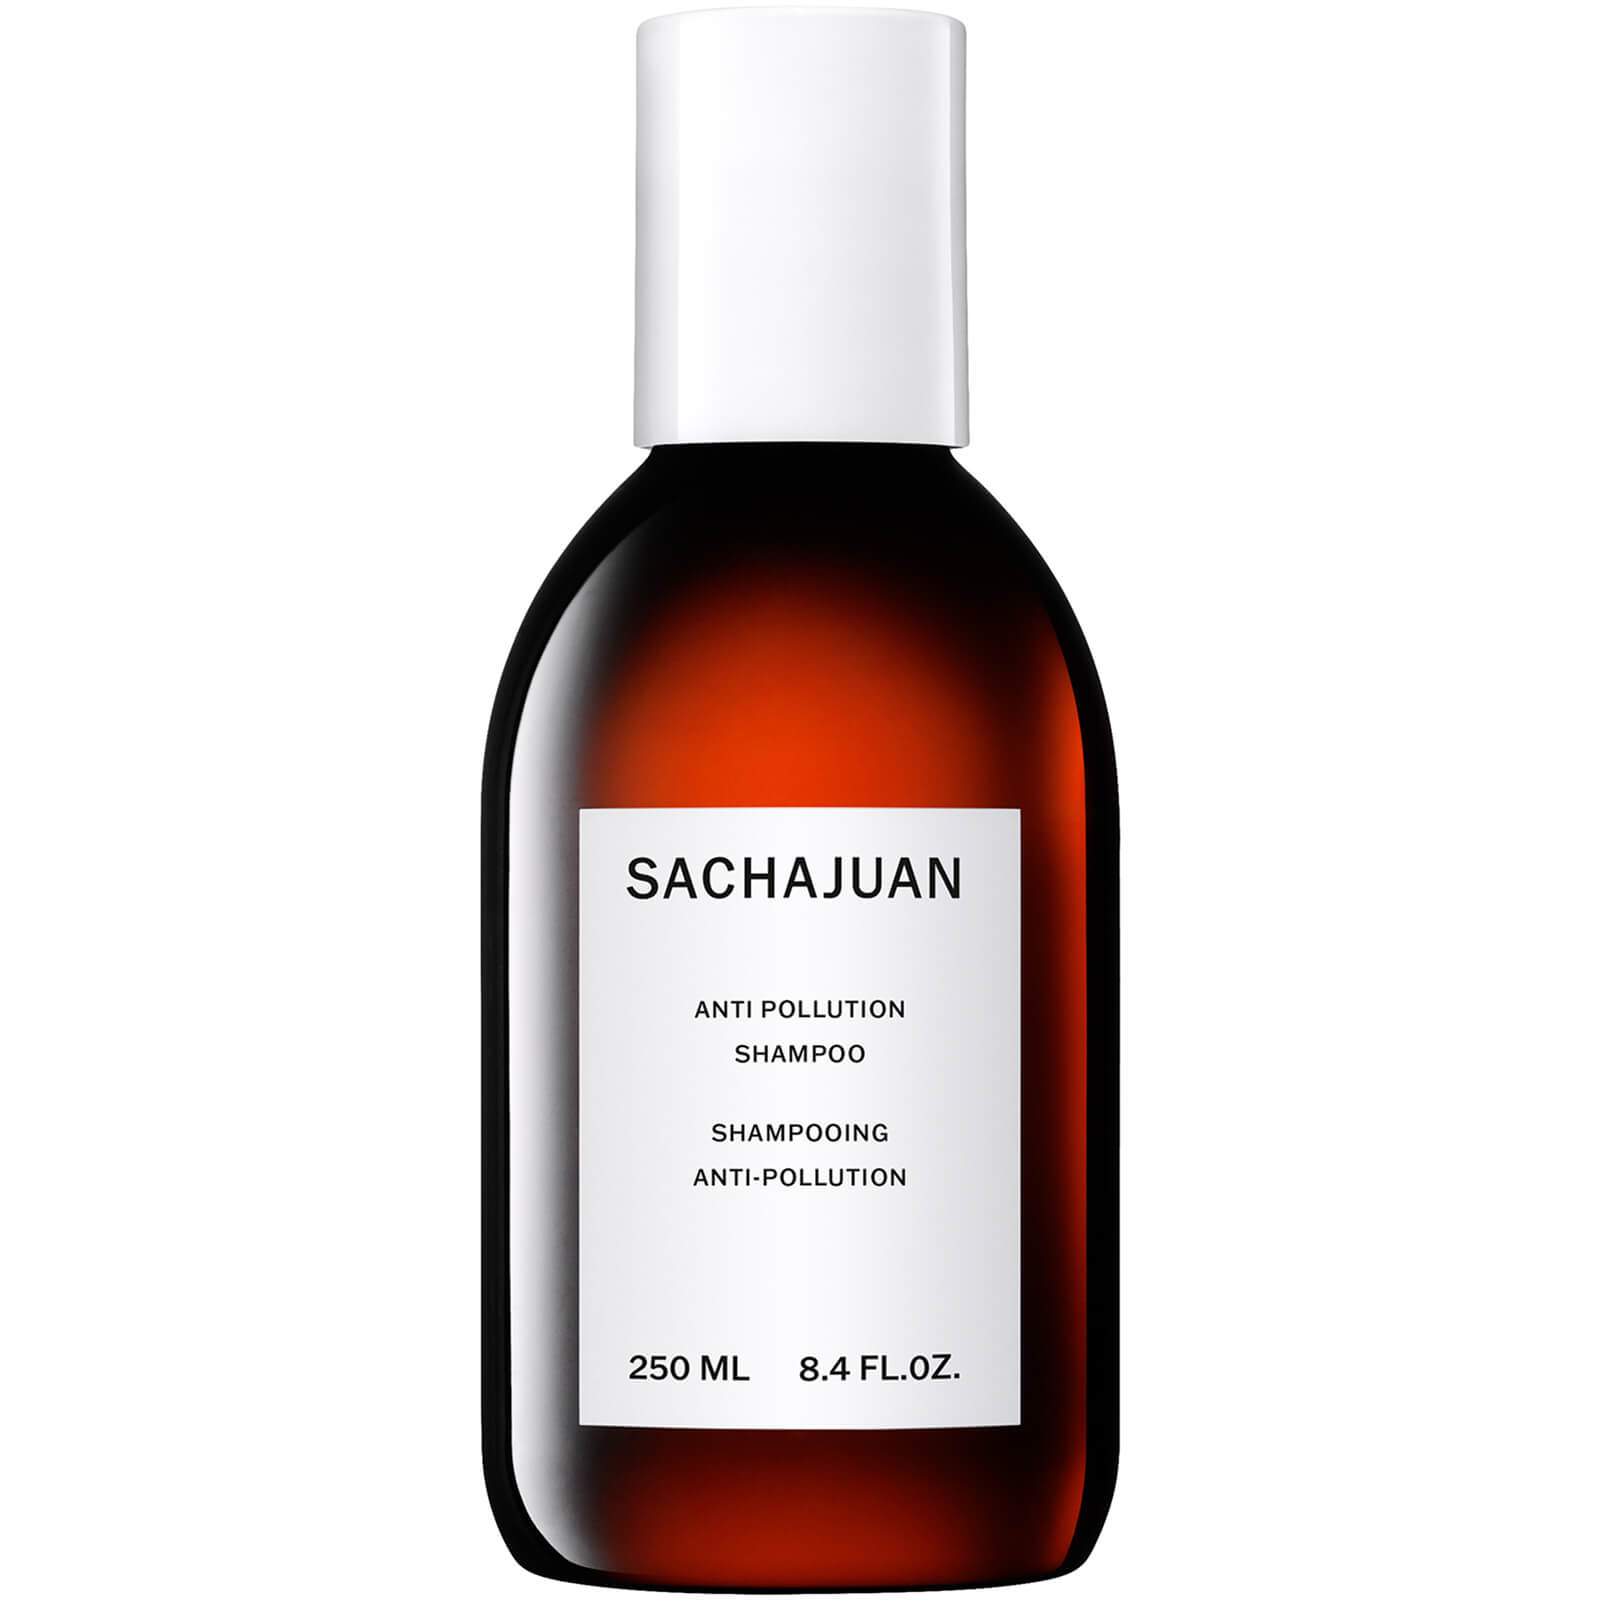 Sachajuan Anti-Pollution Shampoo 250ml product